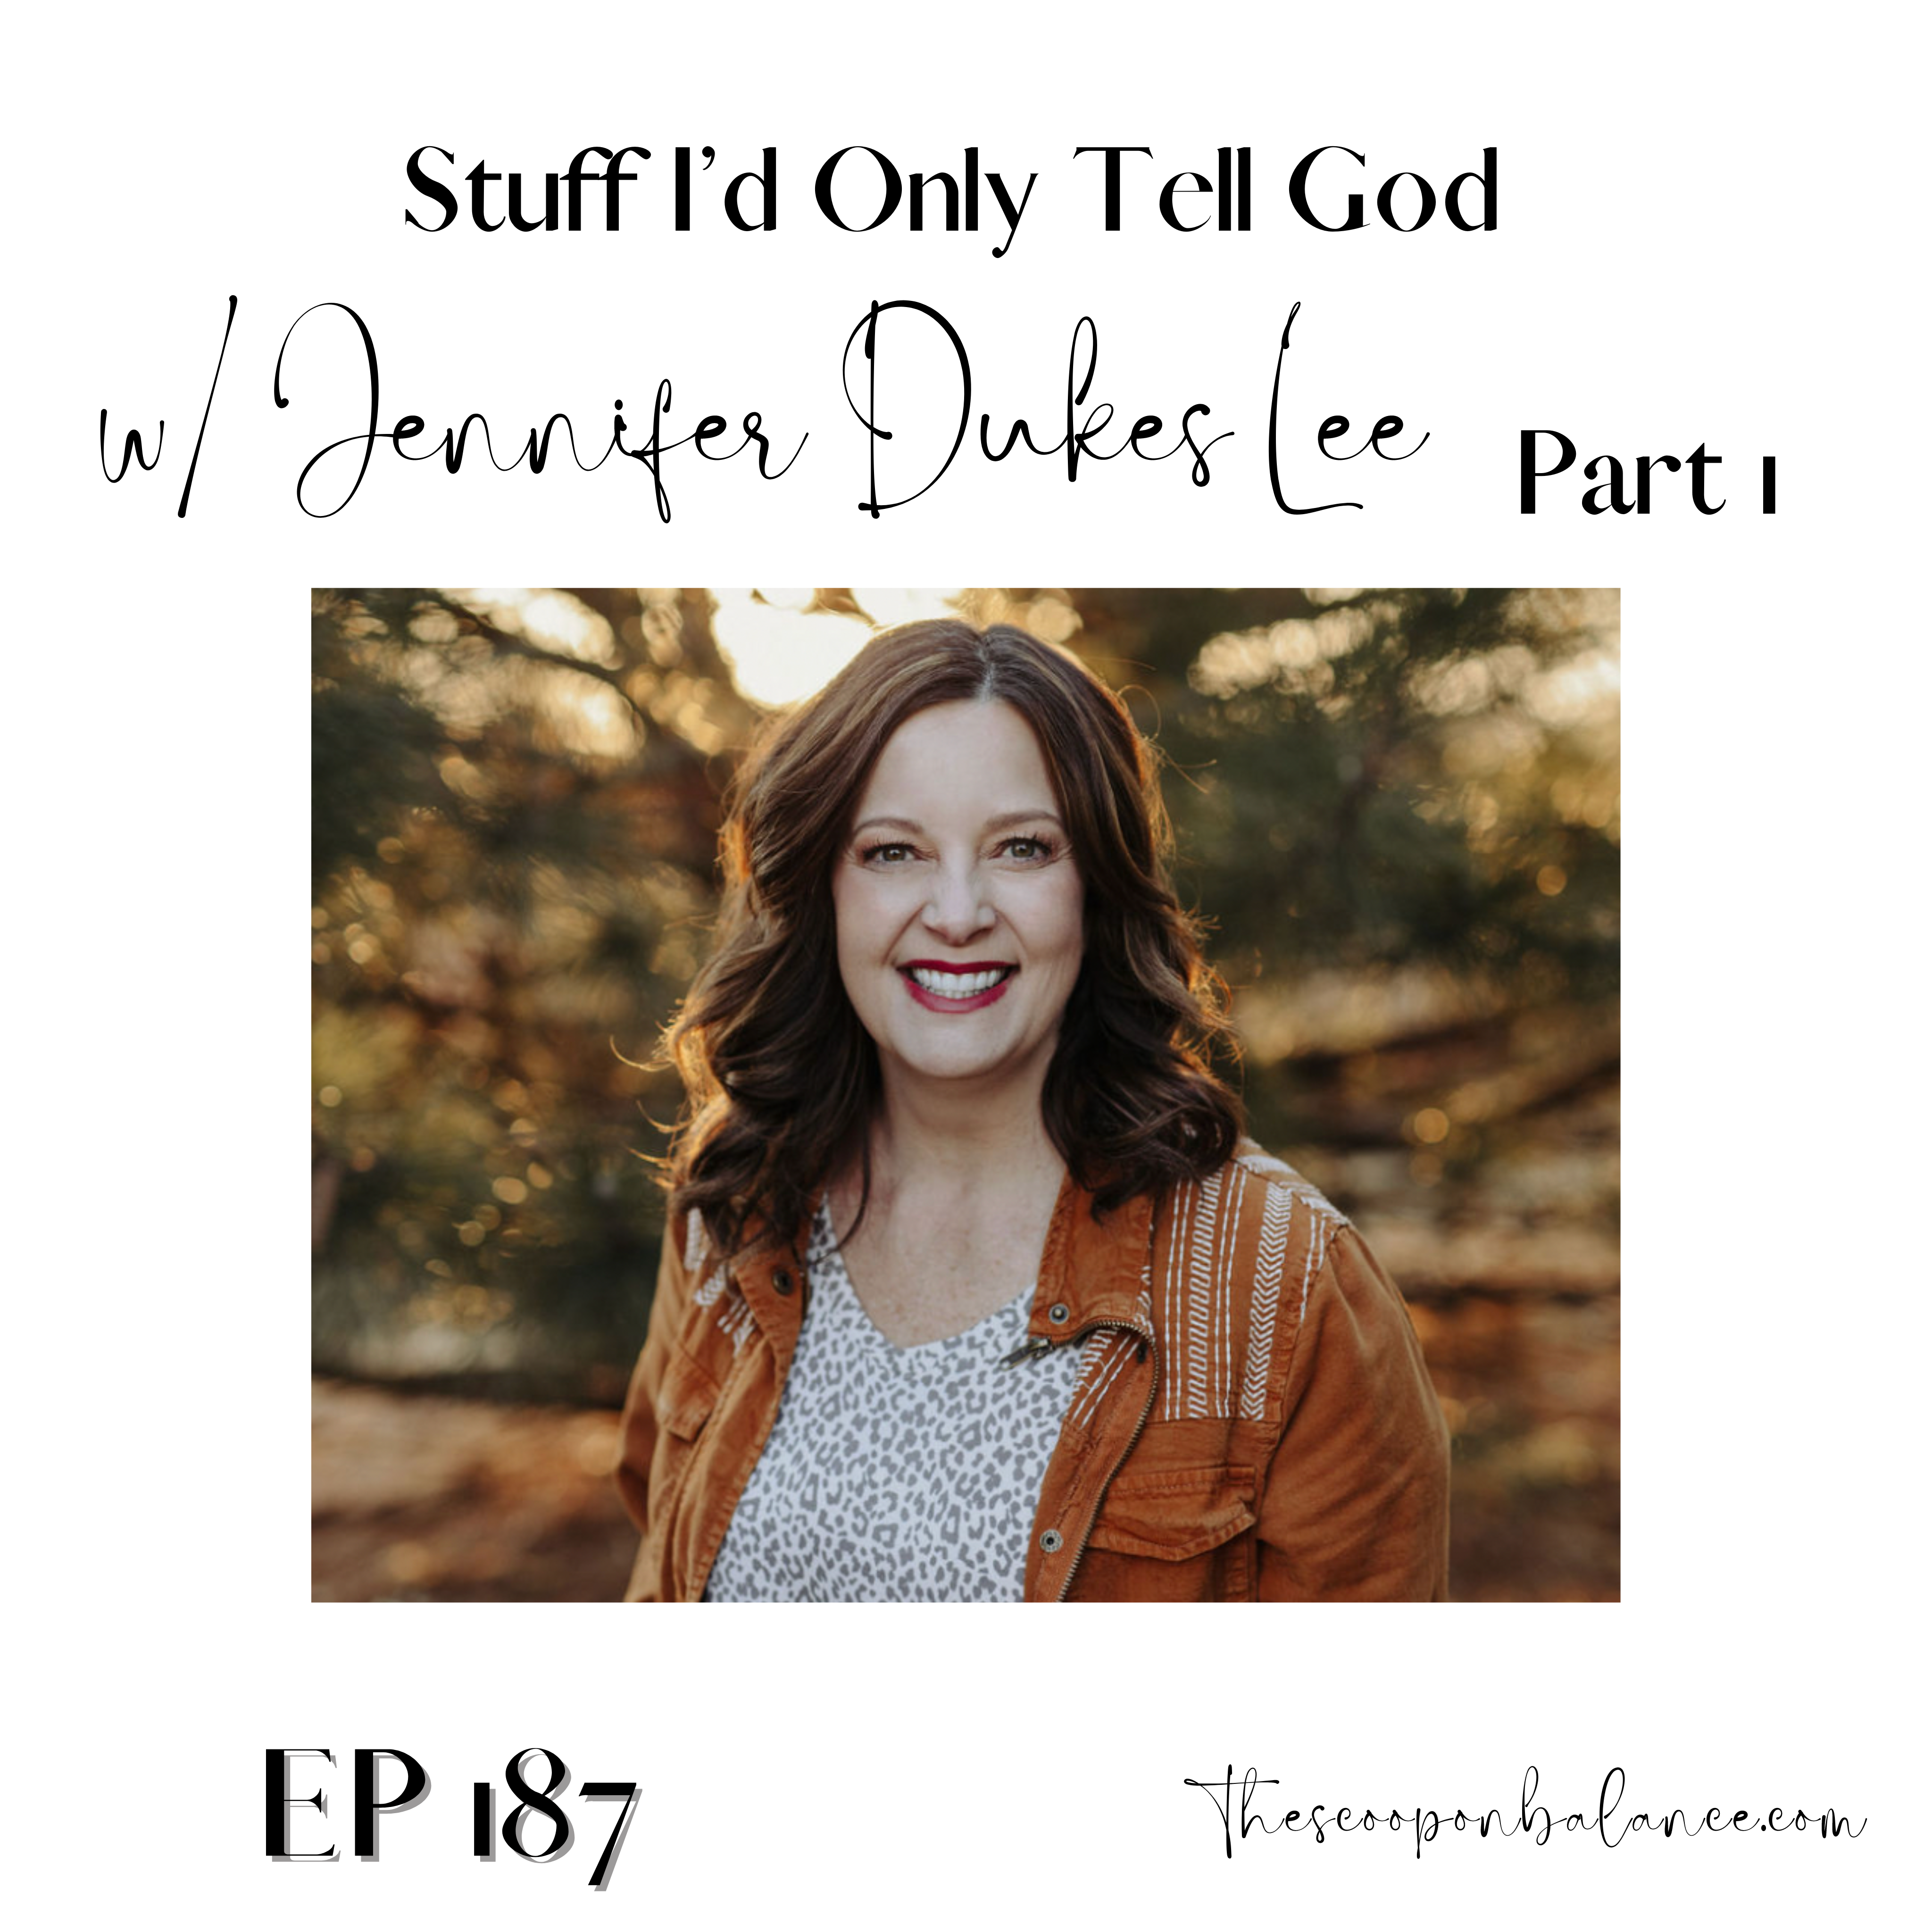 Ep 187: Stuff I’d Only Tell God with Jennifer Dukes Lee, Part 1